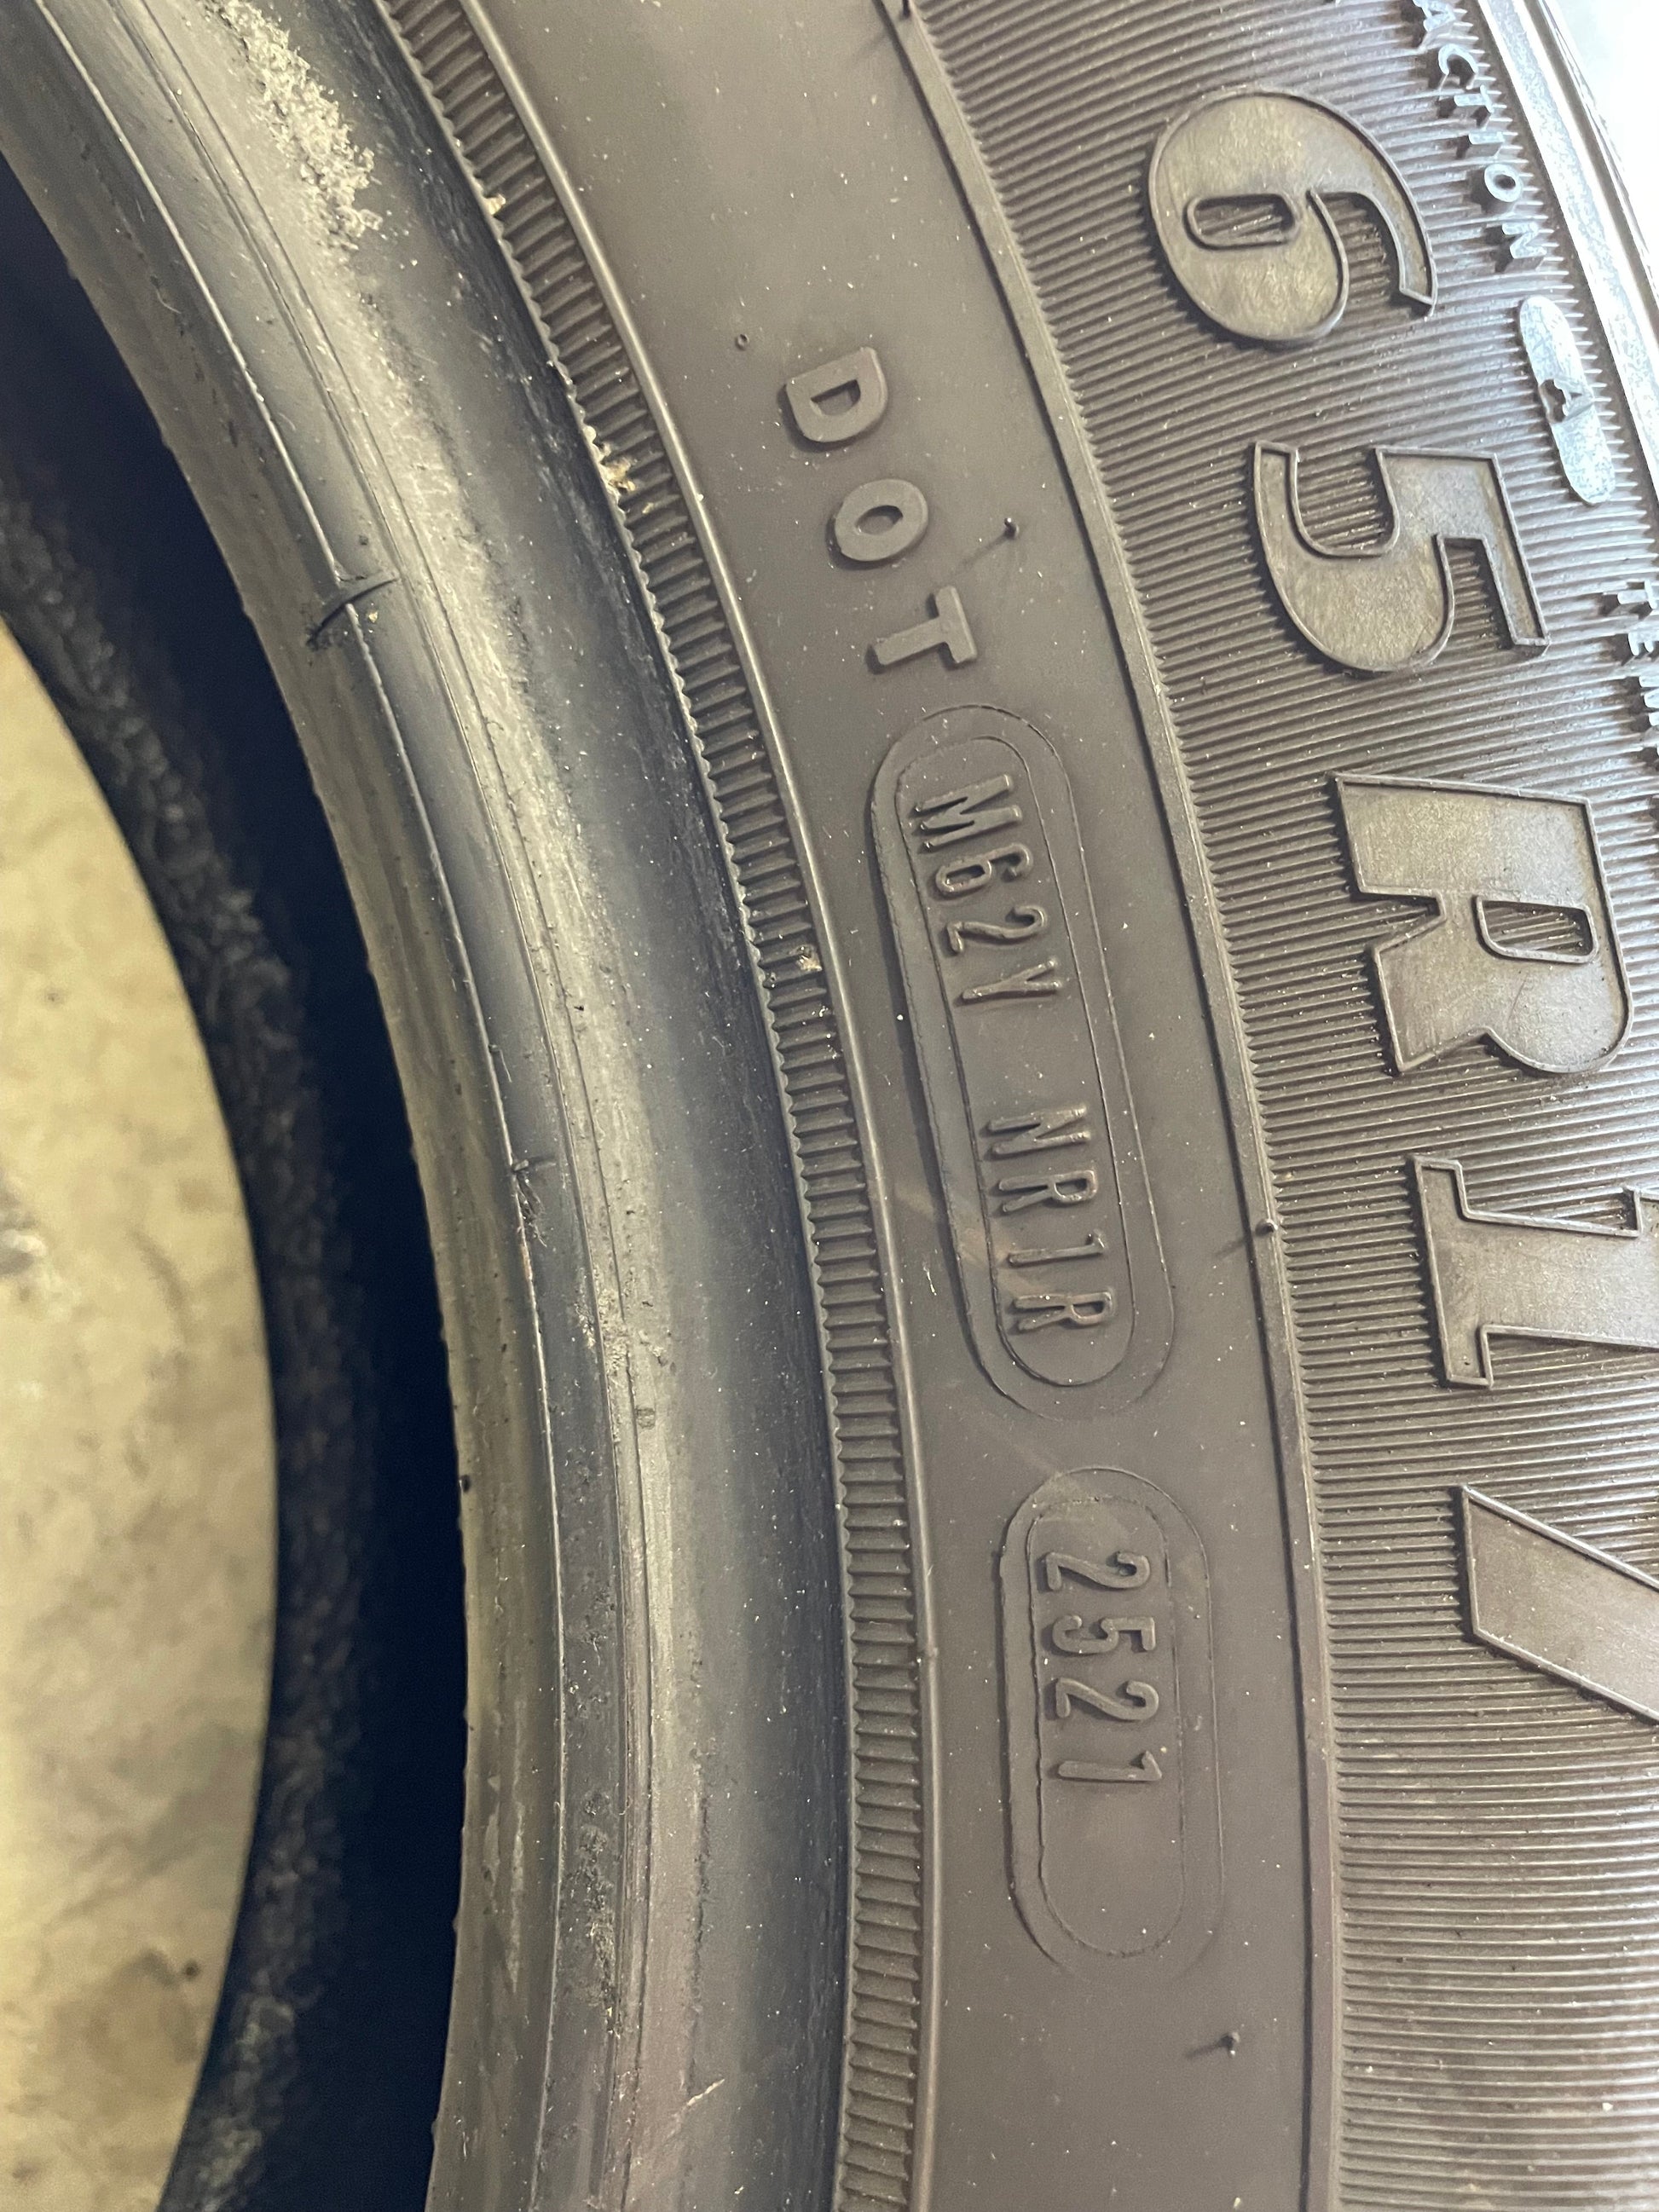 SET OF 2 225/65R17 Goodyear Reliant All Season 102 H SL - Premium Used Tires